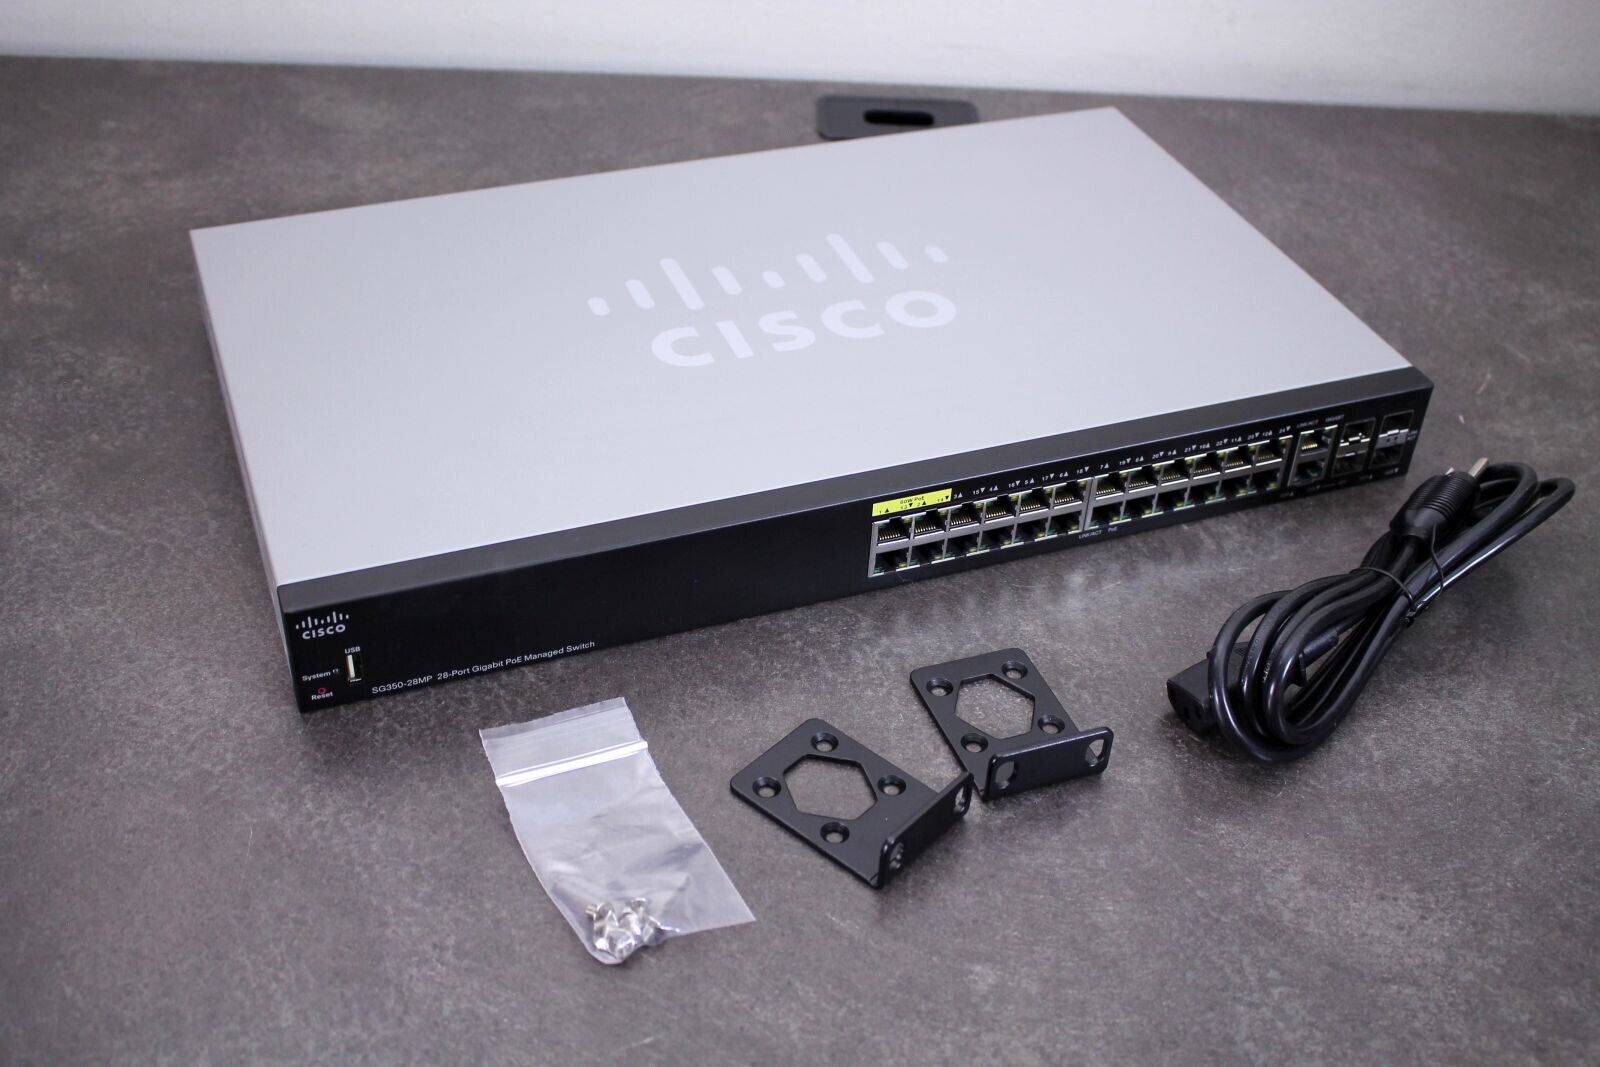 Cisco SG350-28MP 350 Series 28-Port PoE+ Managed Gigabit Ethernet Switch